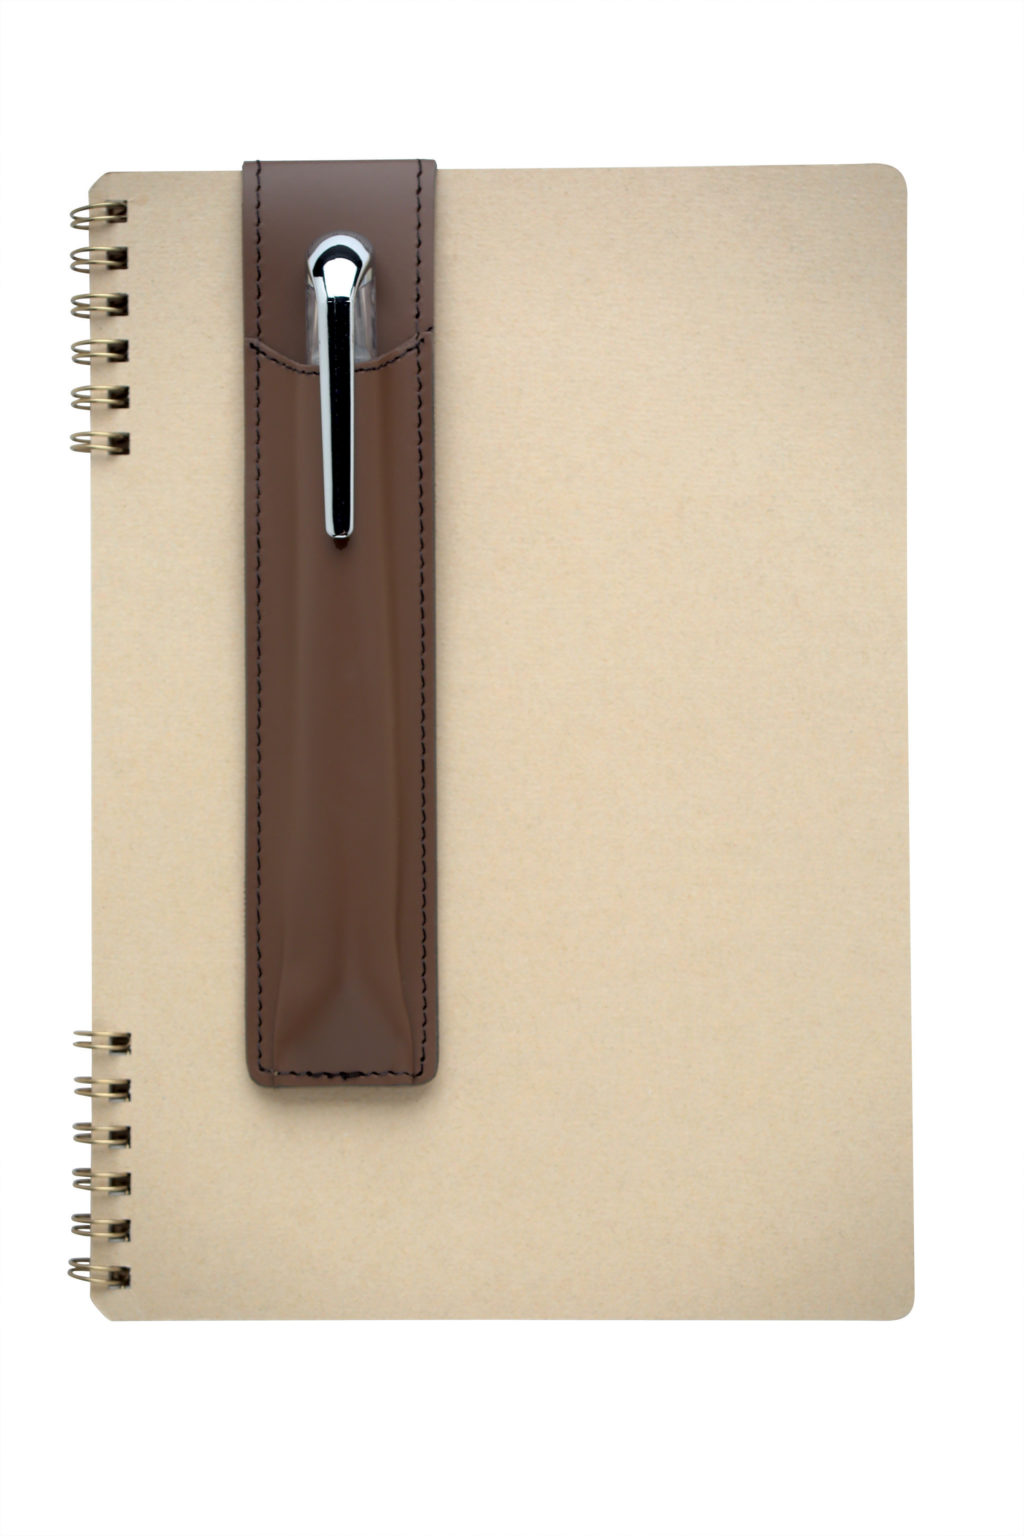 Itoya Profolio Journal Sidekick Magnetic Pen Holder in Brown